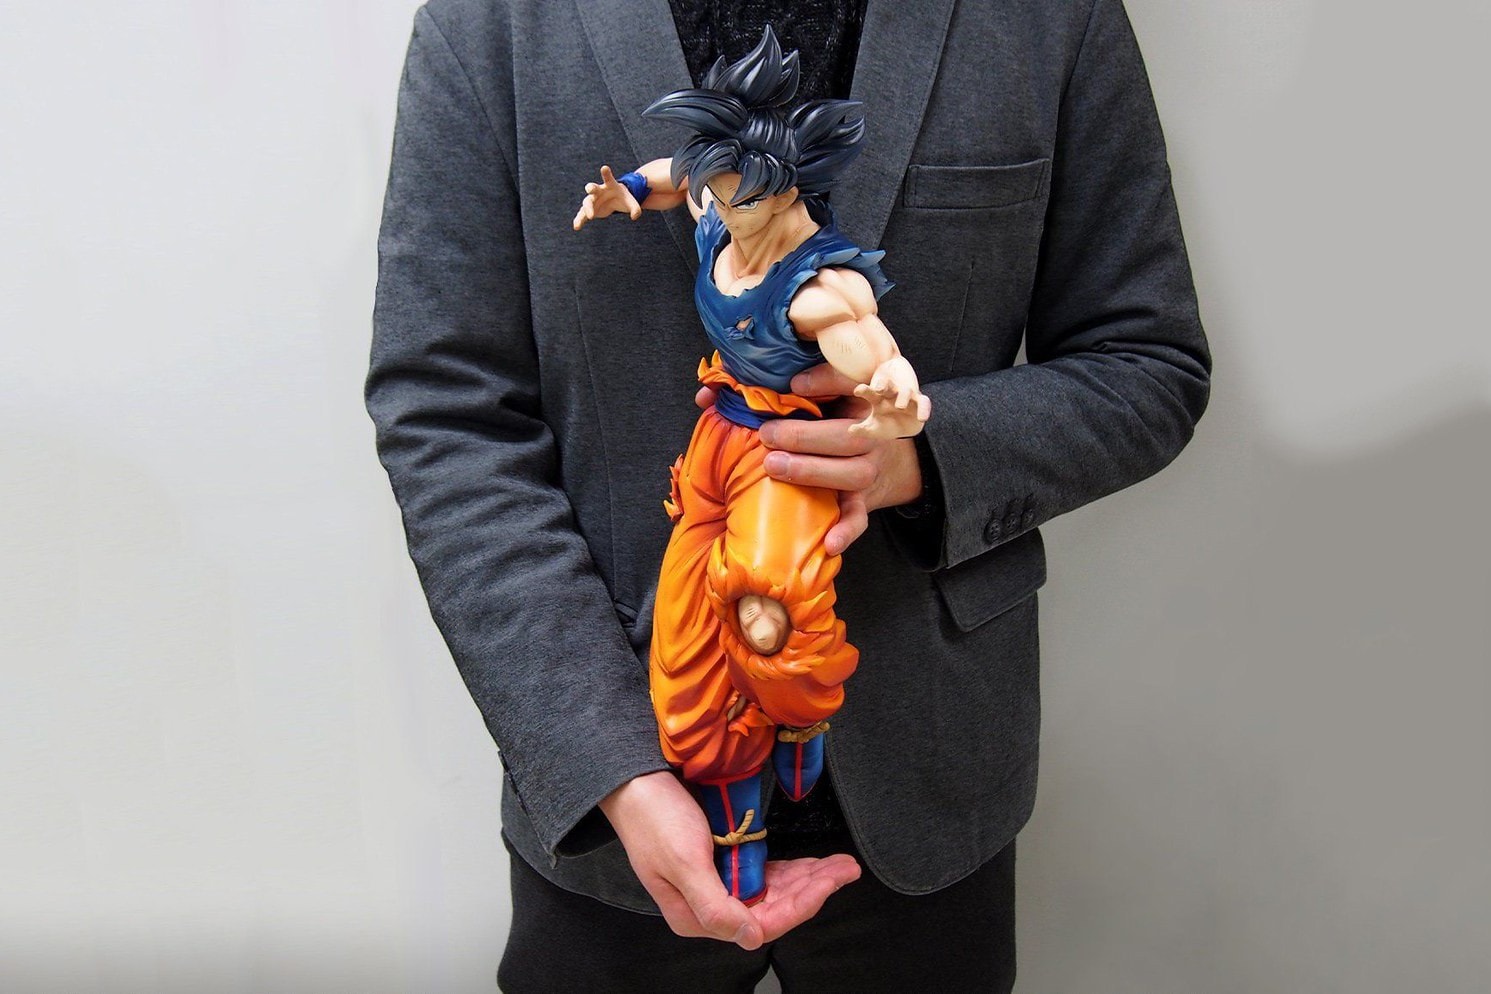 Anime Super Shenron ULTIMATE VARIATION Statue PVC Action Figures